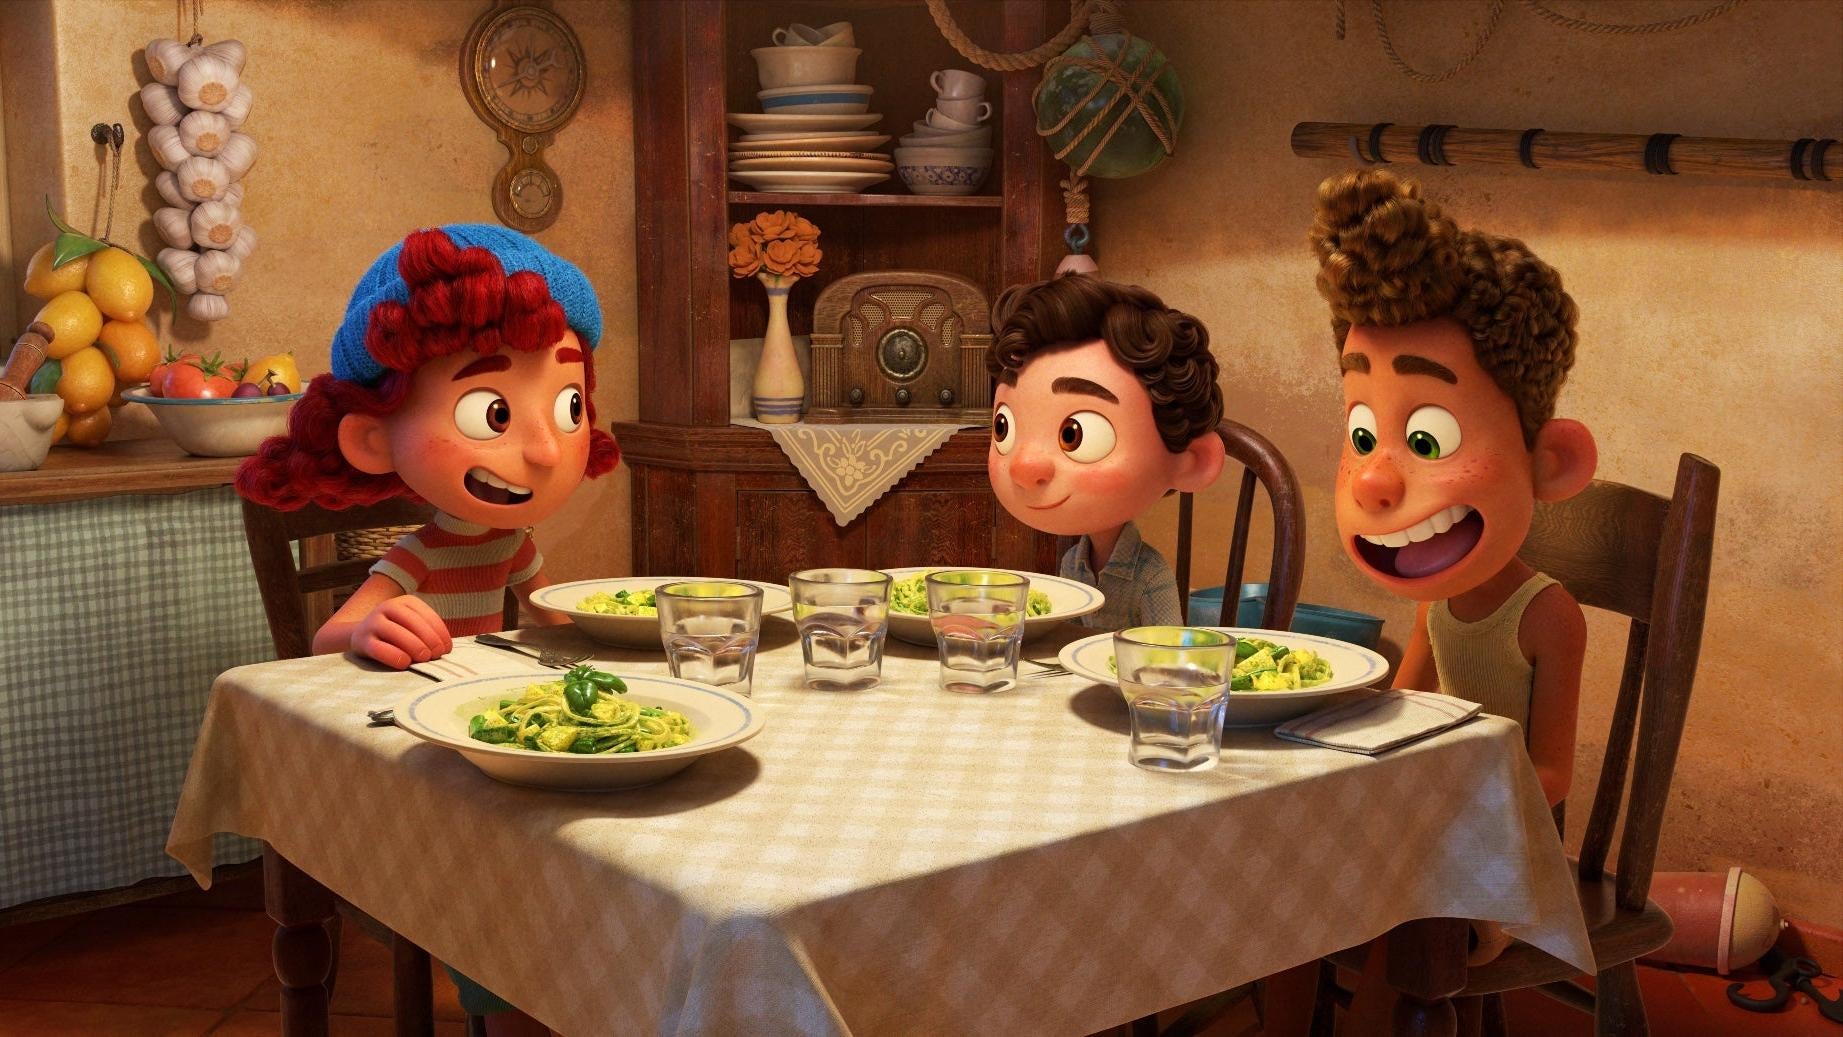 Pasta dinner. (Image: Pixar)